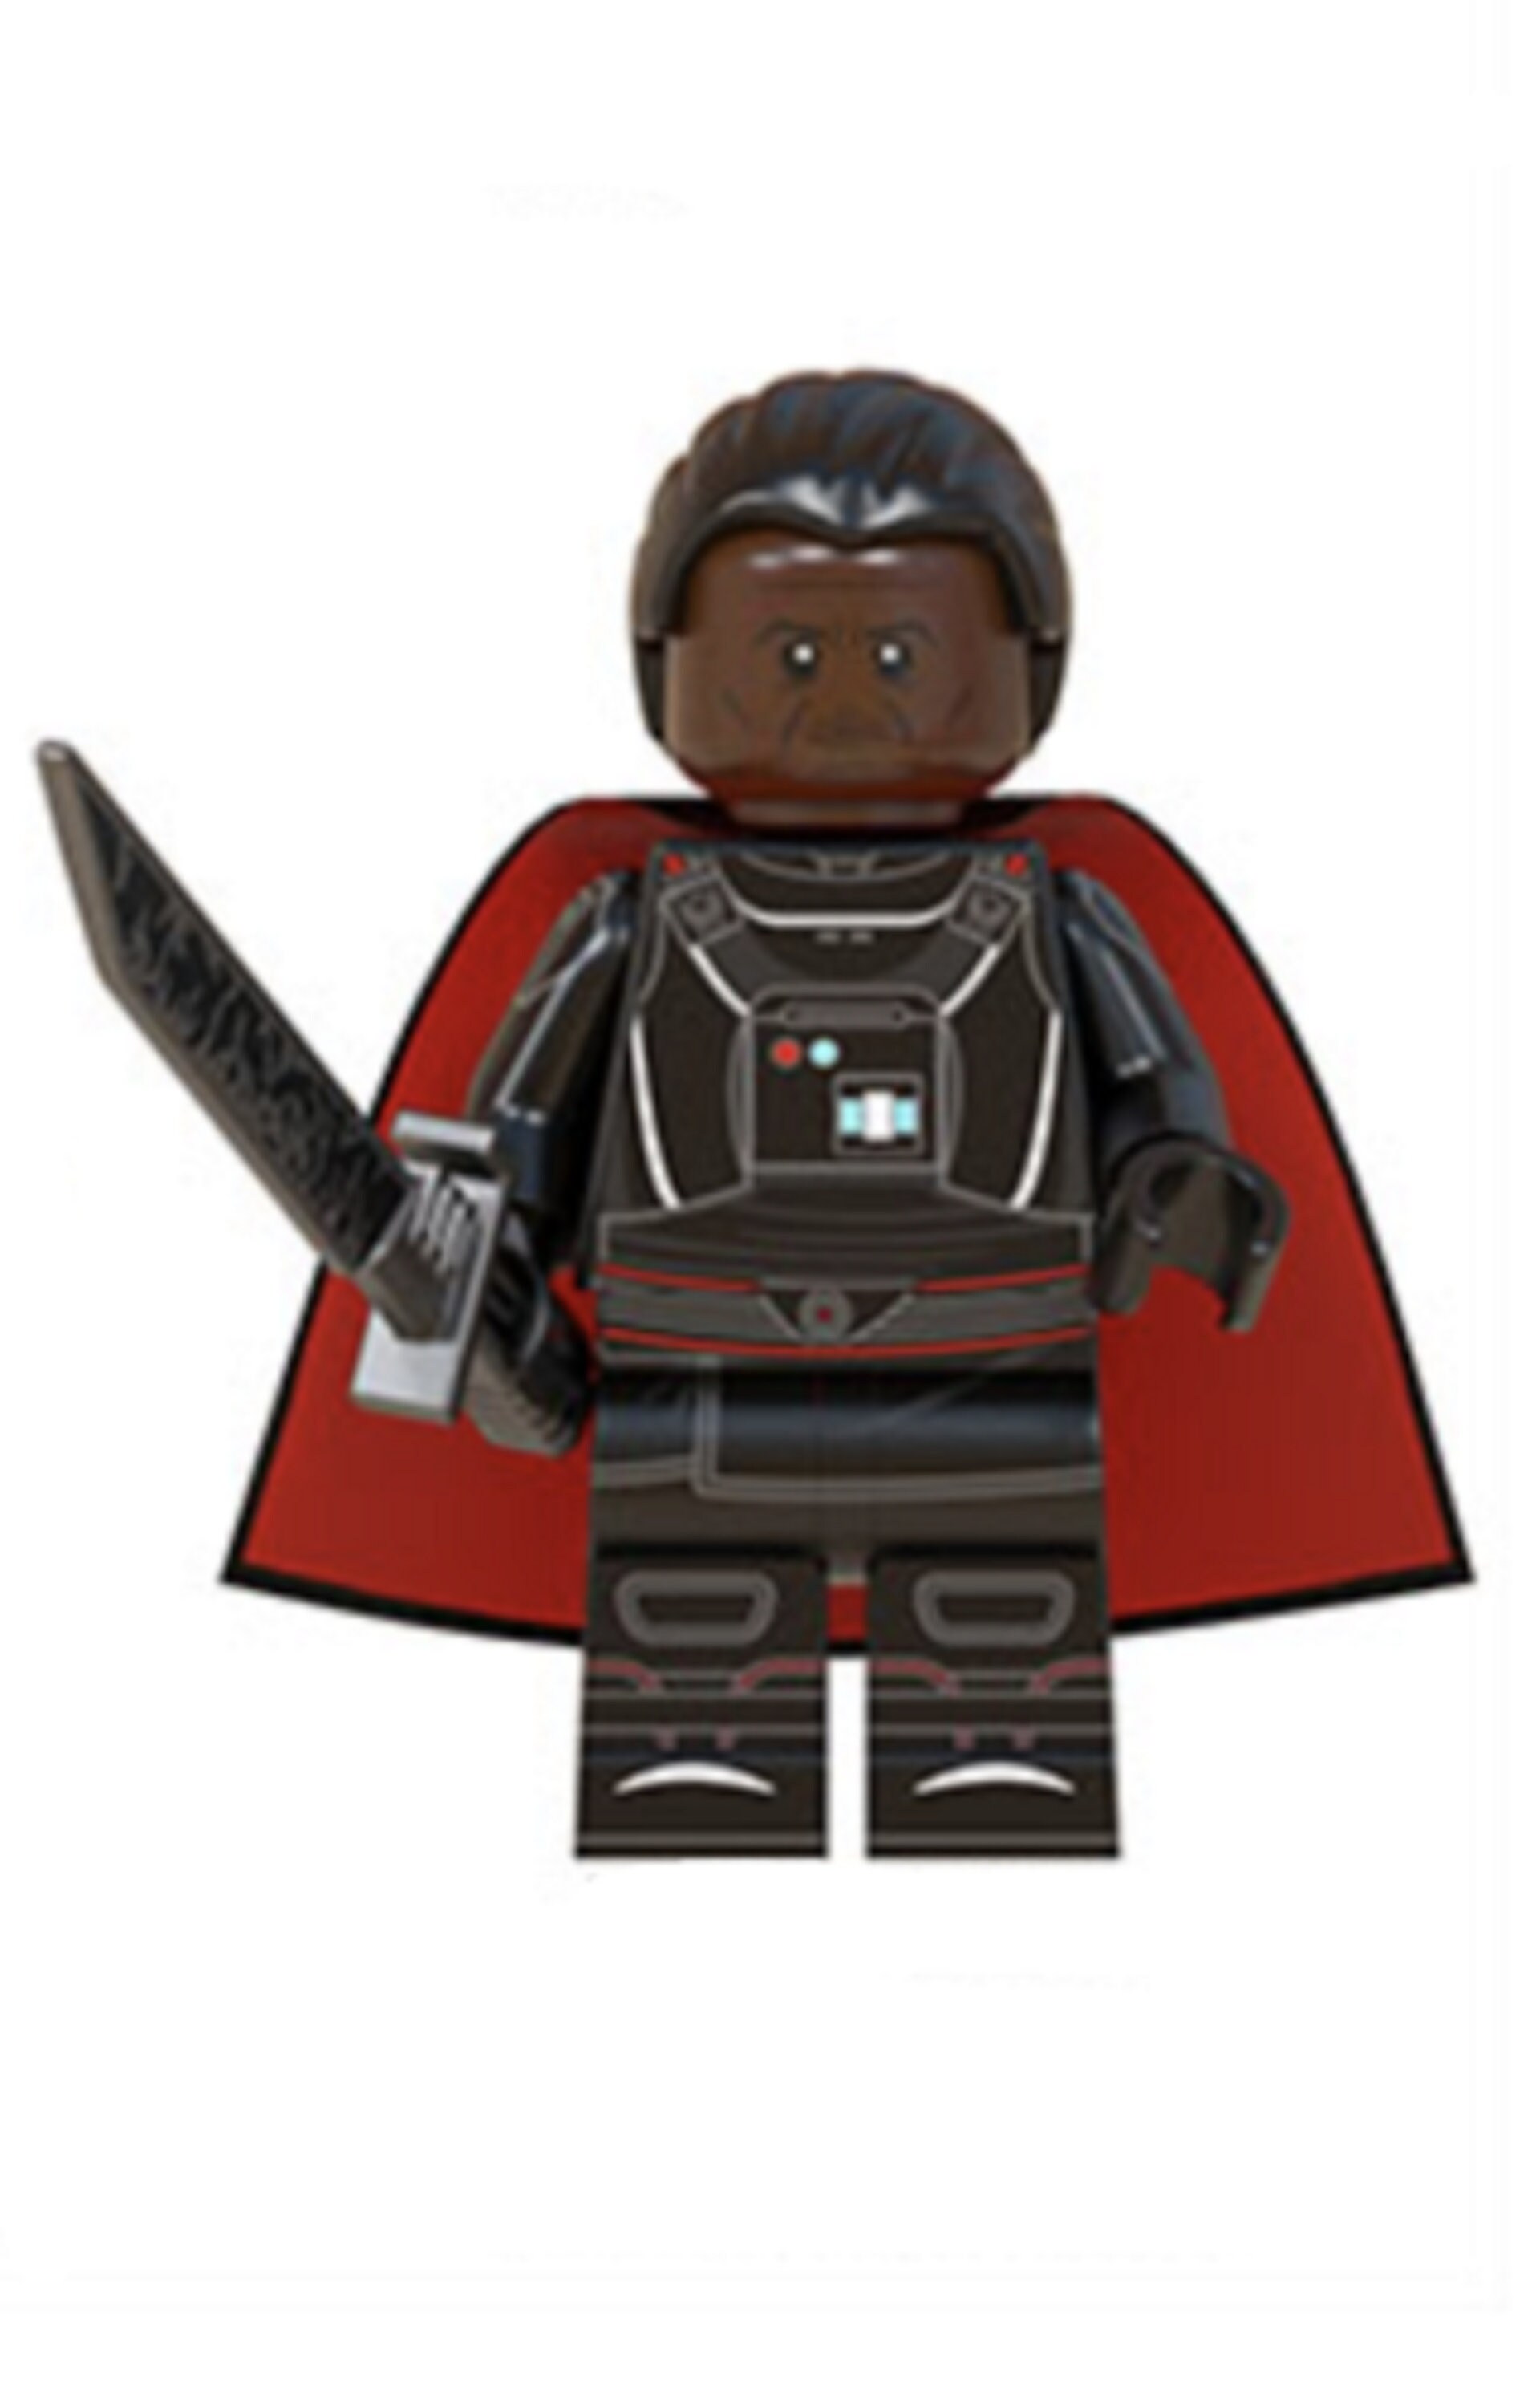 Custom Star Wars Mandalorian Moff Gideon minifigures on lego bricks 